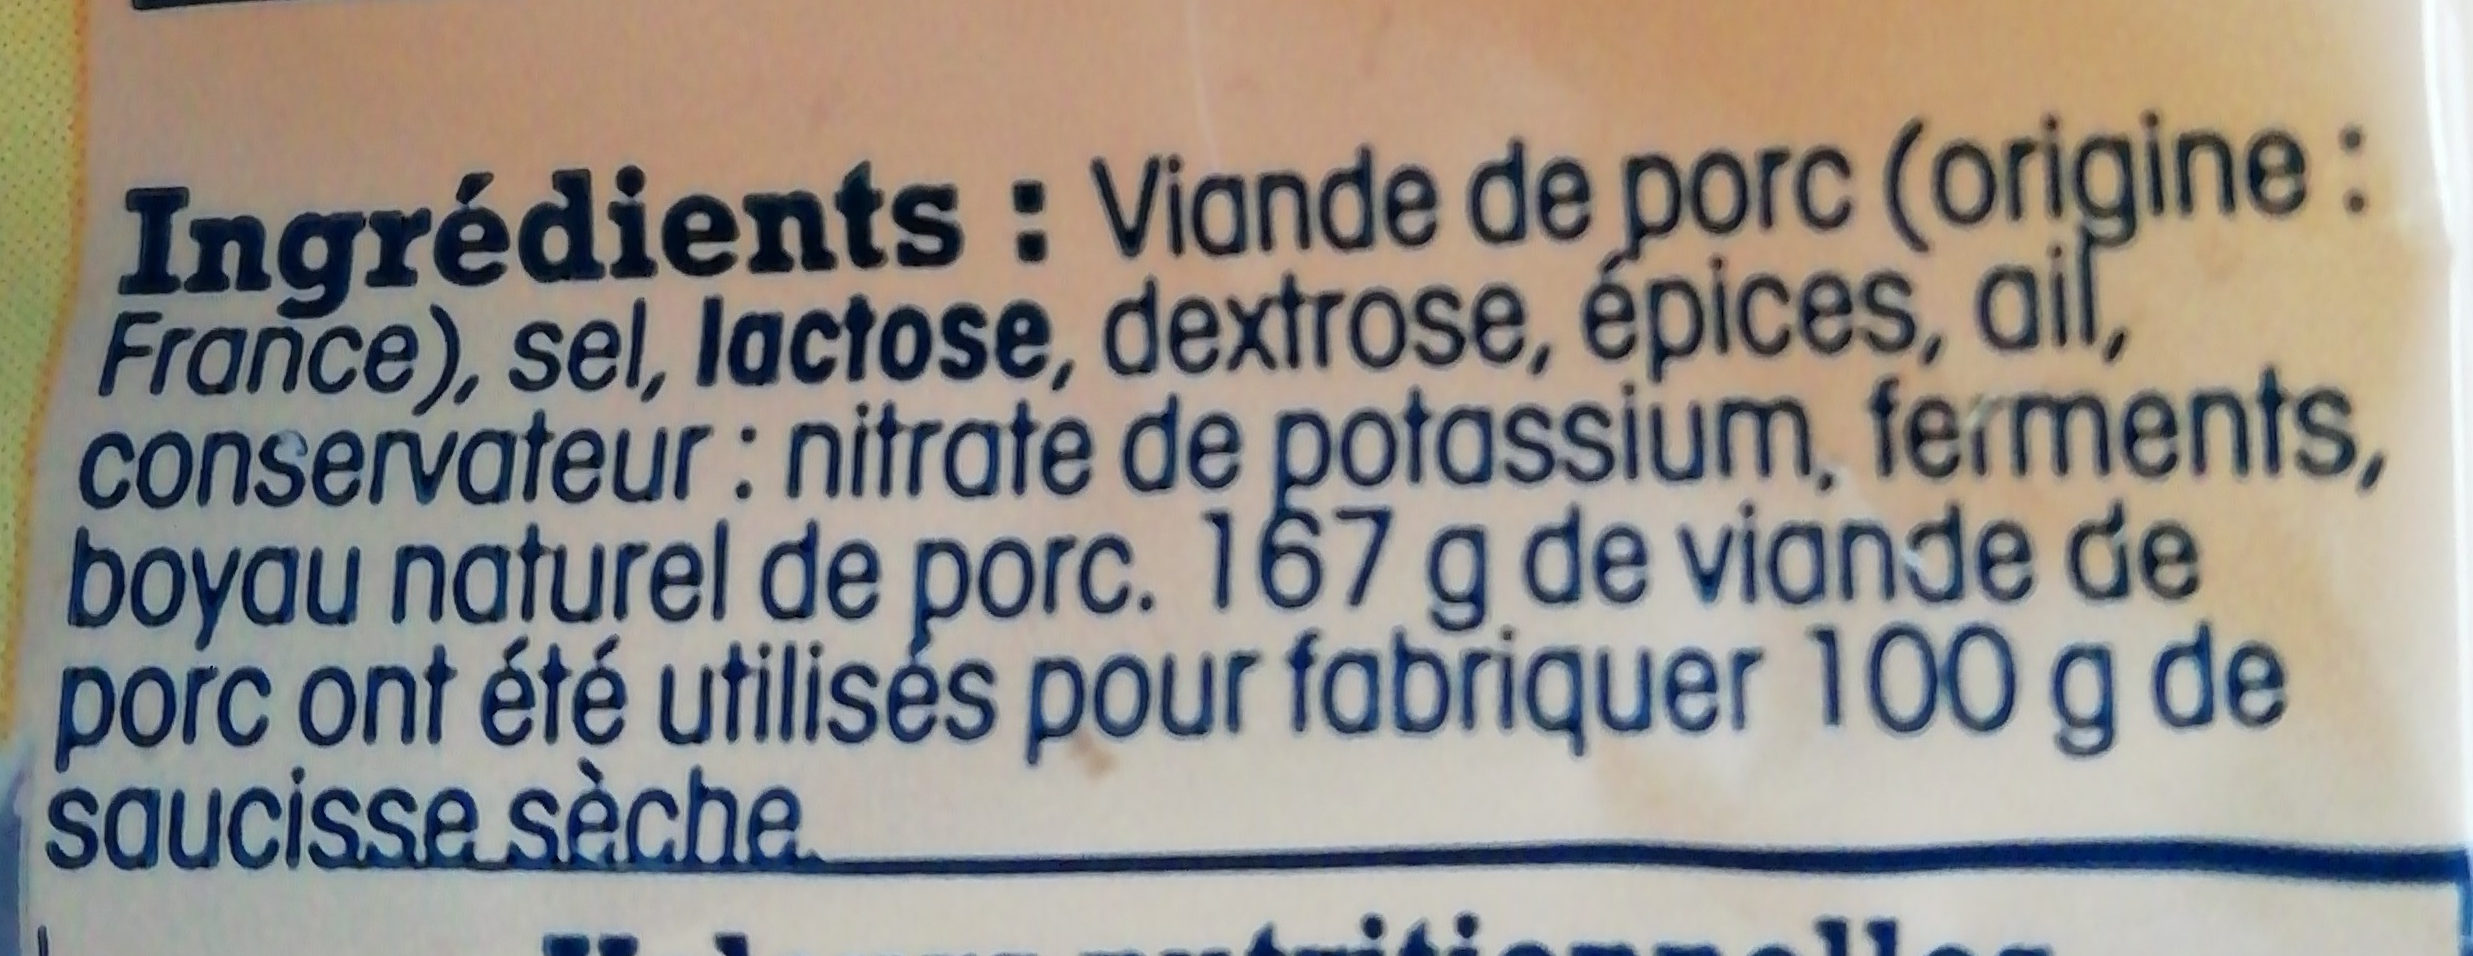 Saucisse Seche - Ingredients - fr